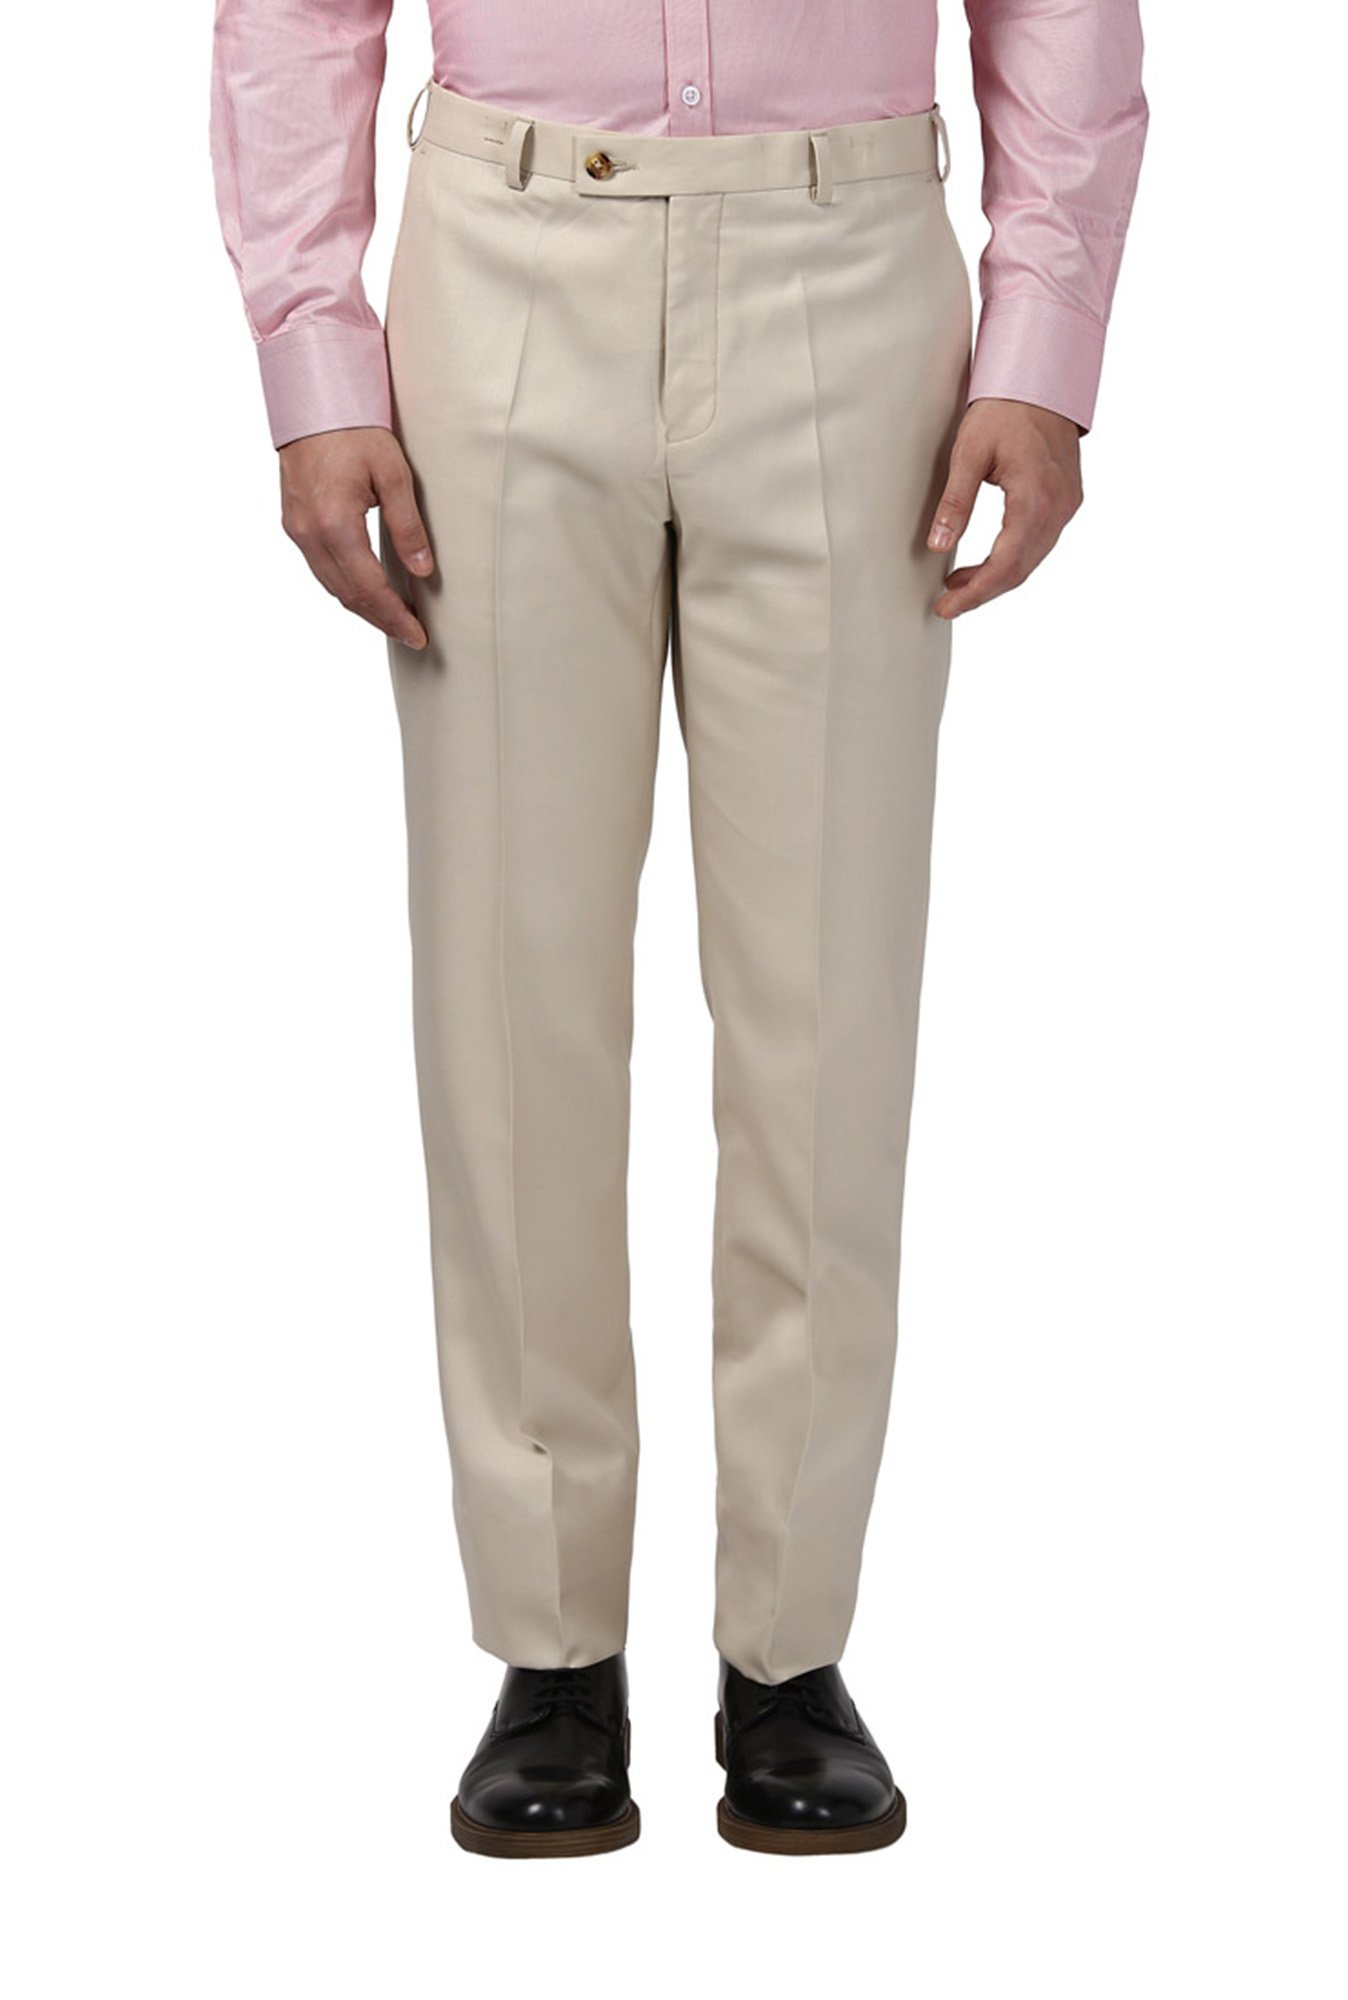 Buy Next Look Men Black Regular Fit Self Design Formal Trousers online   Looksgudin